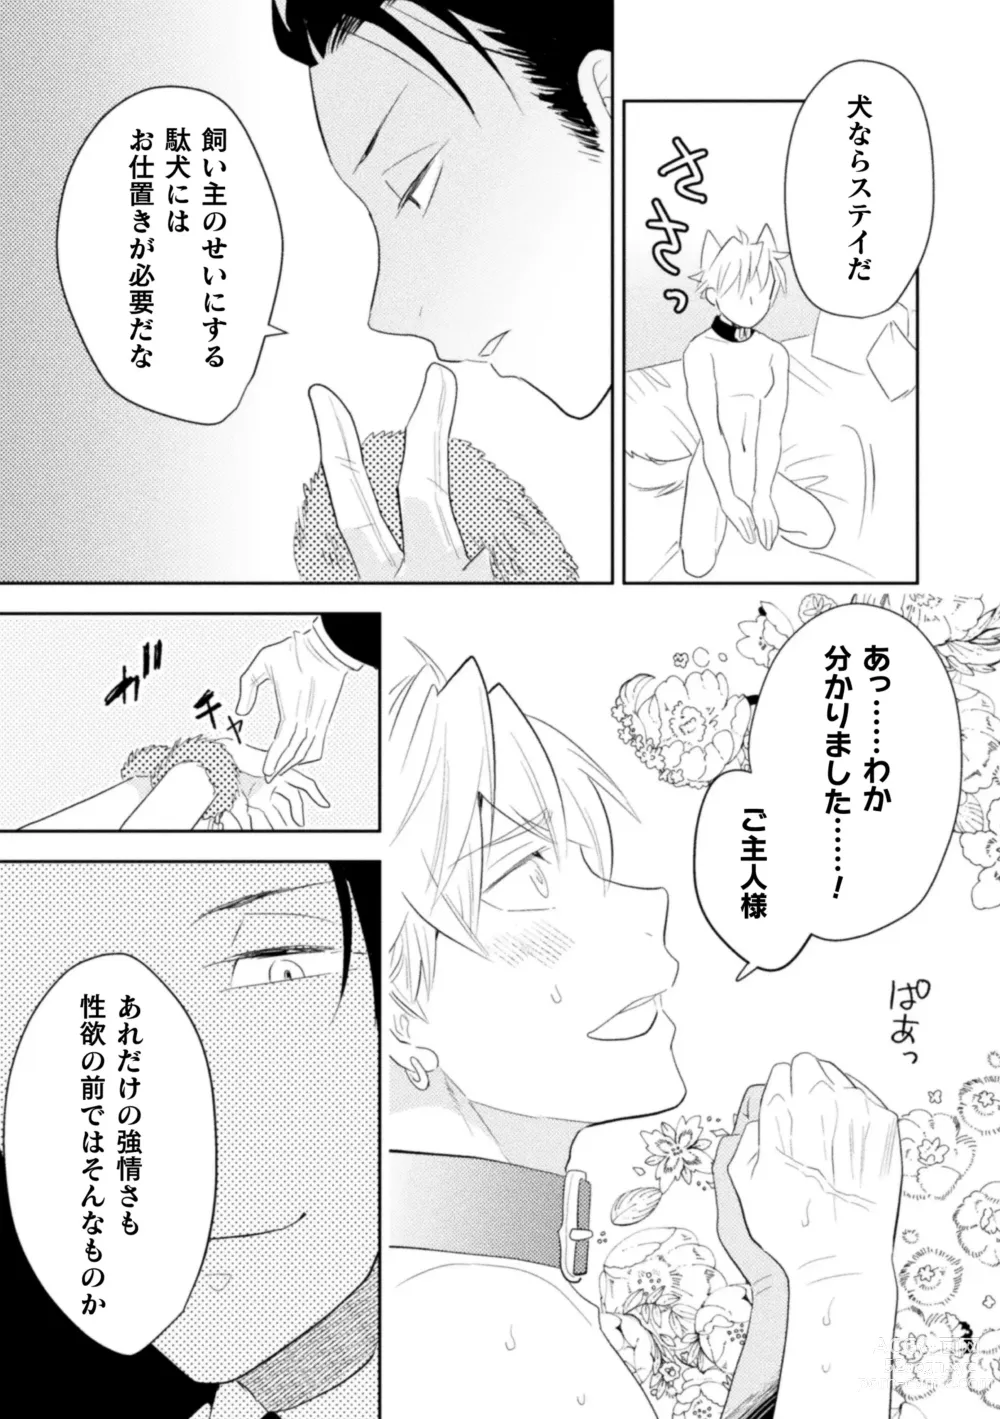 Page 7 of manga Zekkai Rougoku 5 Eien no Rougoku Zenpen